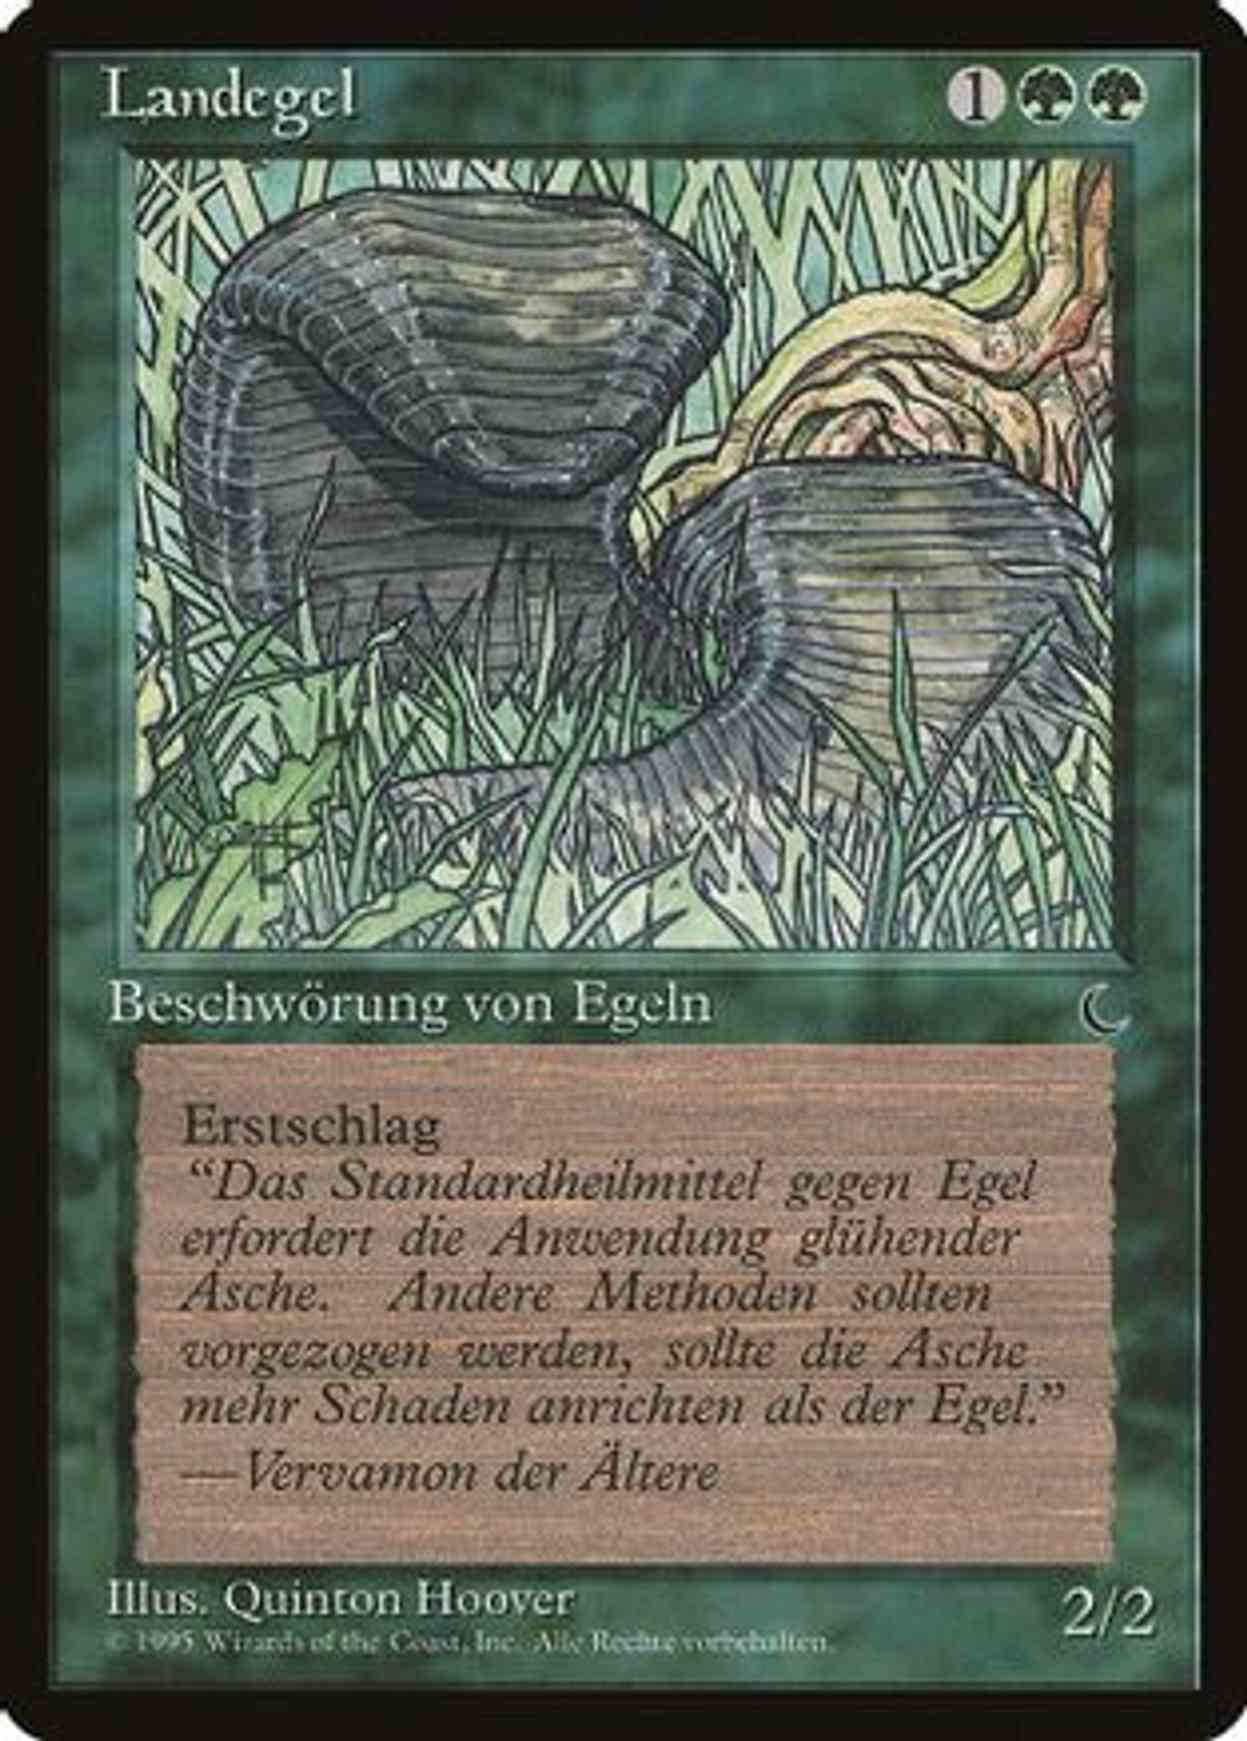 Land Leeches (German) - "Landegel" magic card front